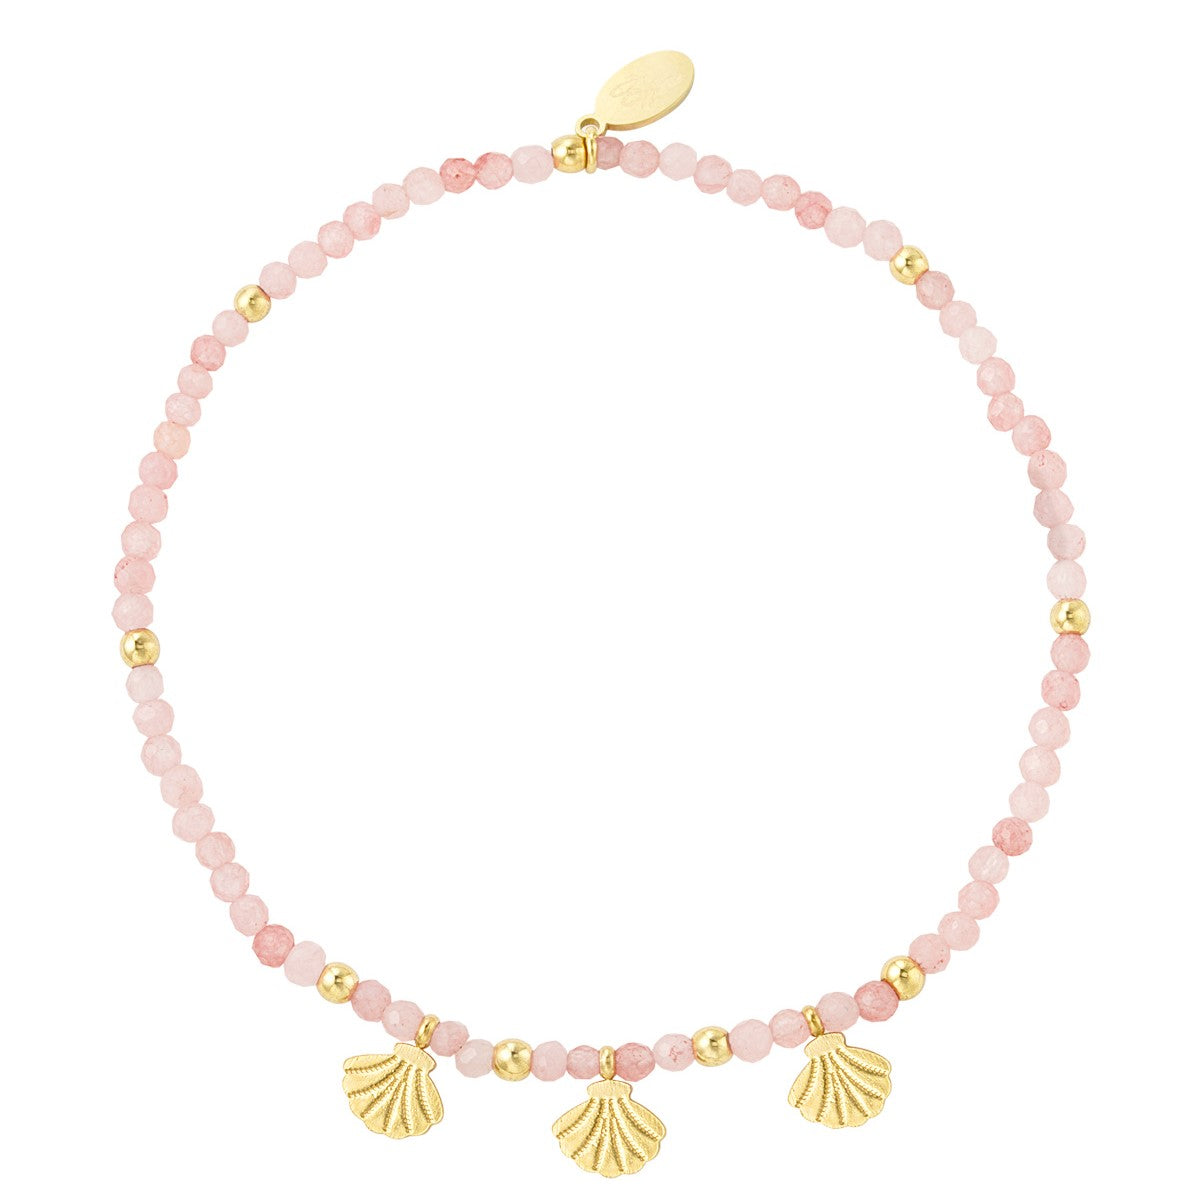 Bracelet colorful seashells pink